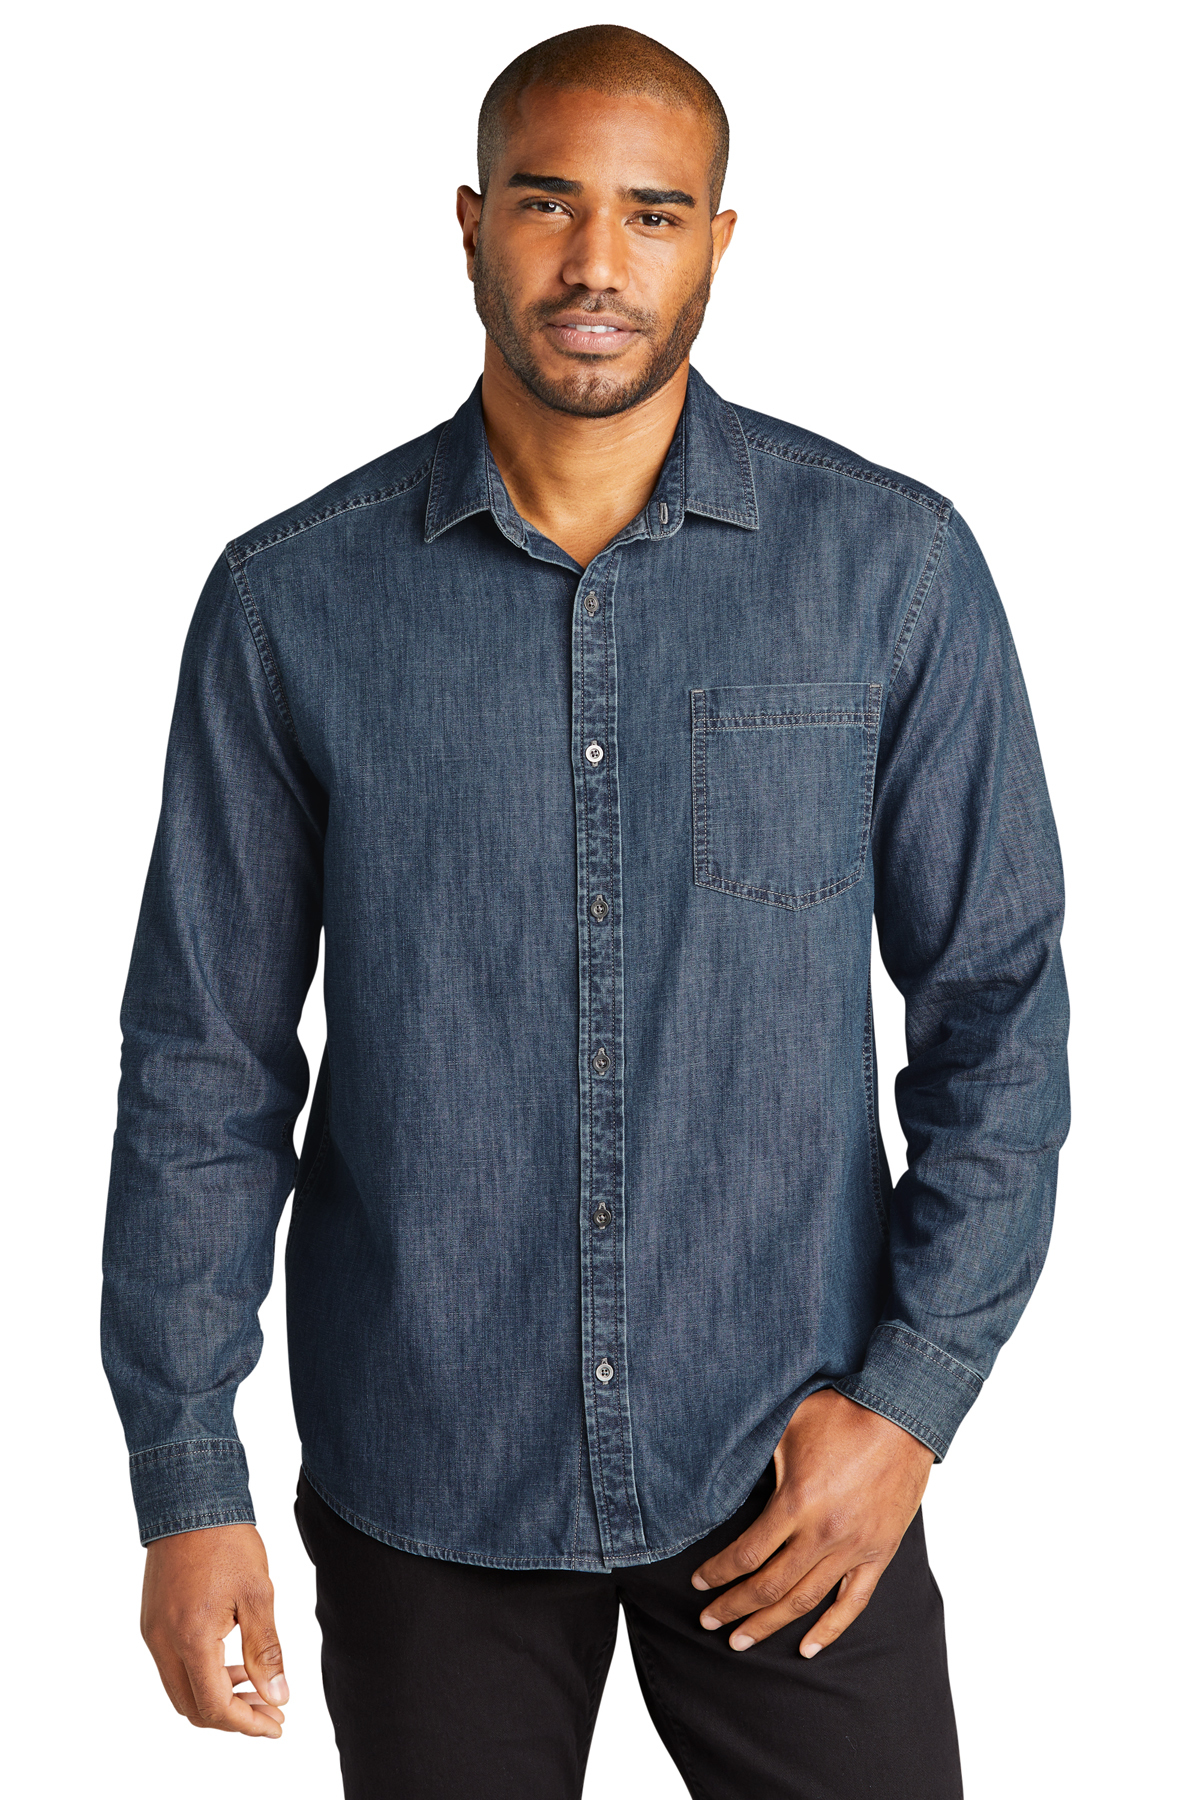 Denim Shirt Combination With Jeans | Best Denim Shirt For Men | How To  Style Denim Shirt men - YouTube